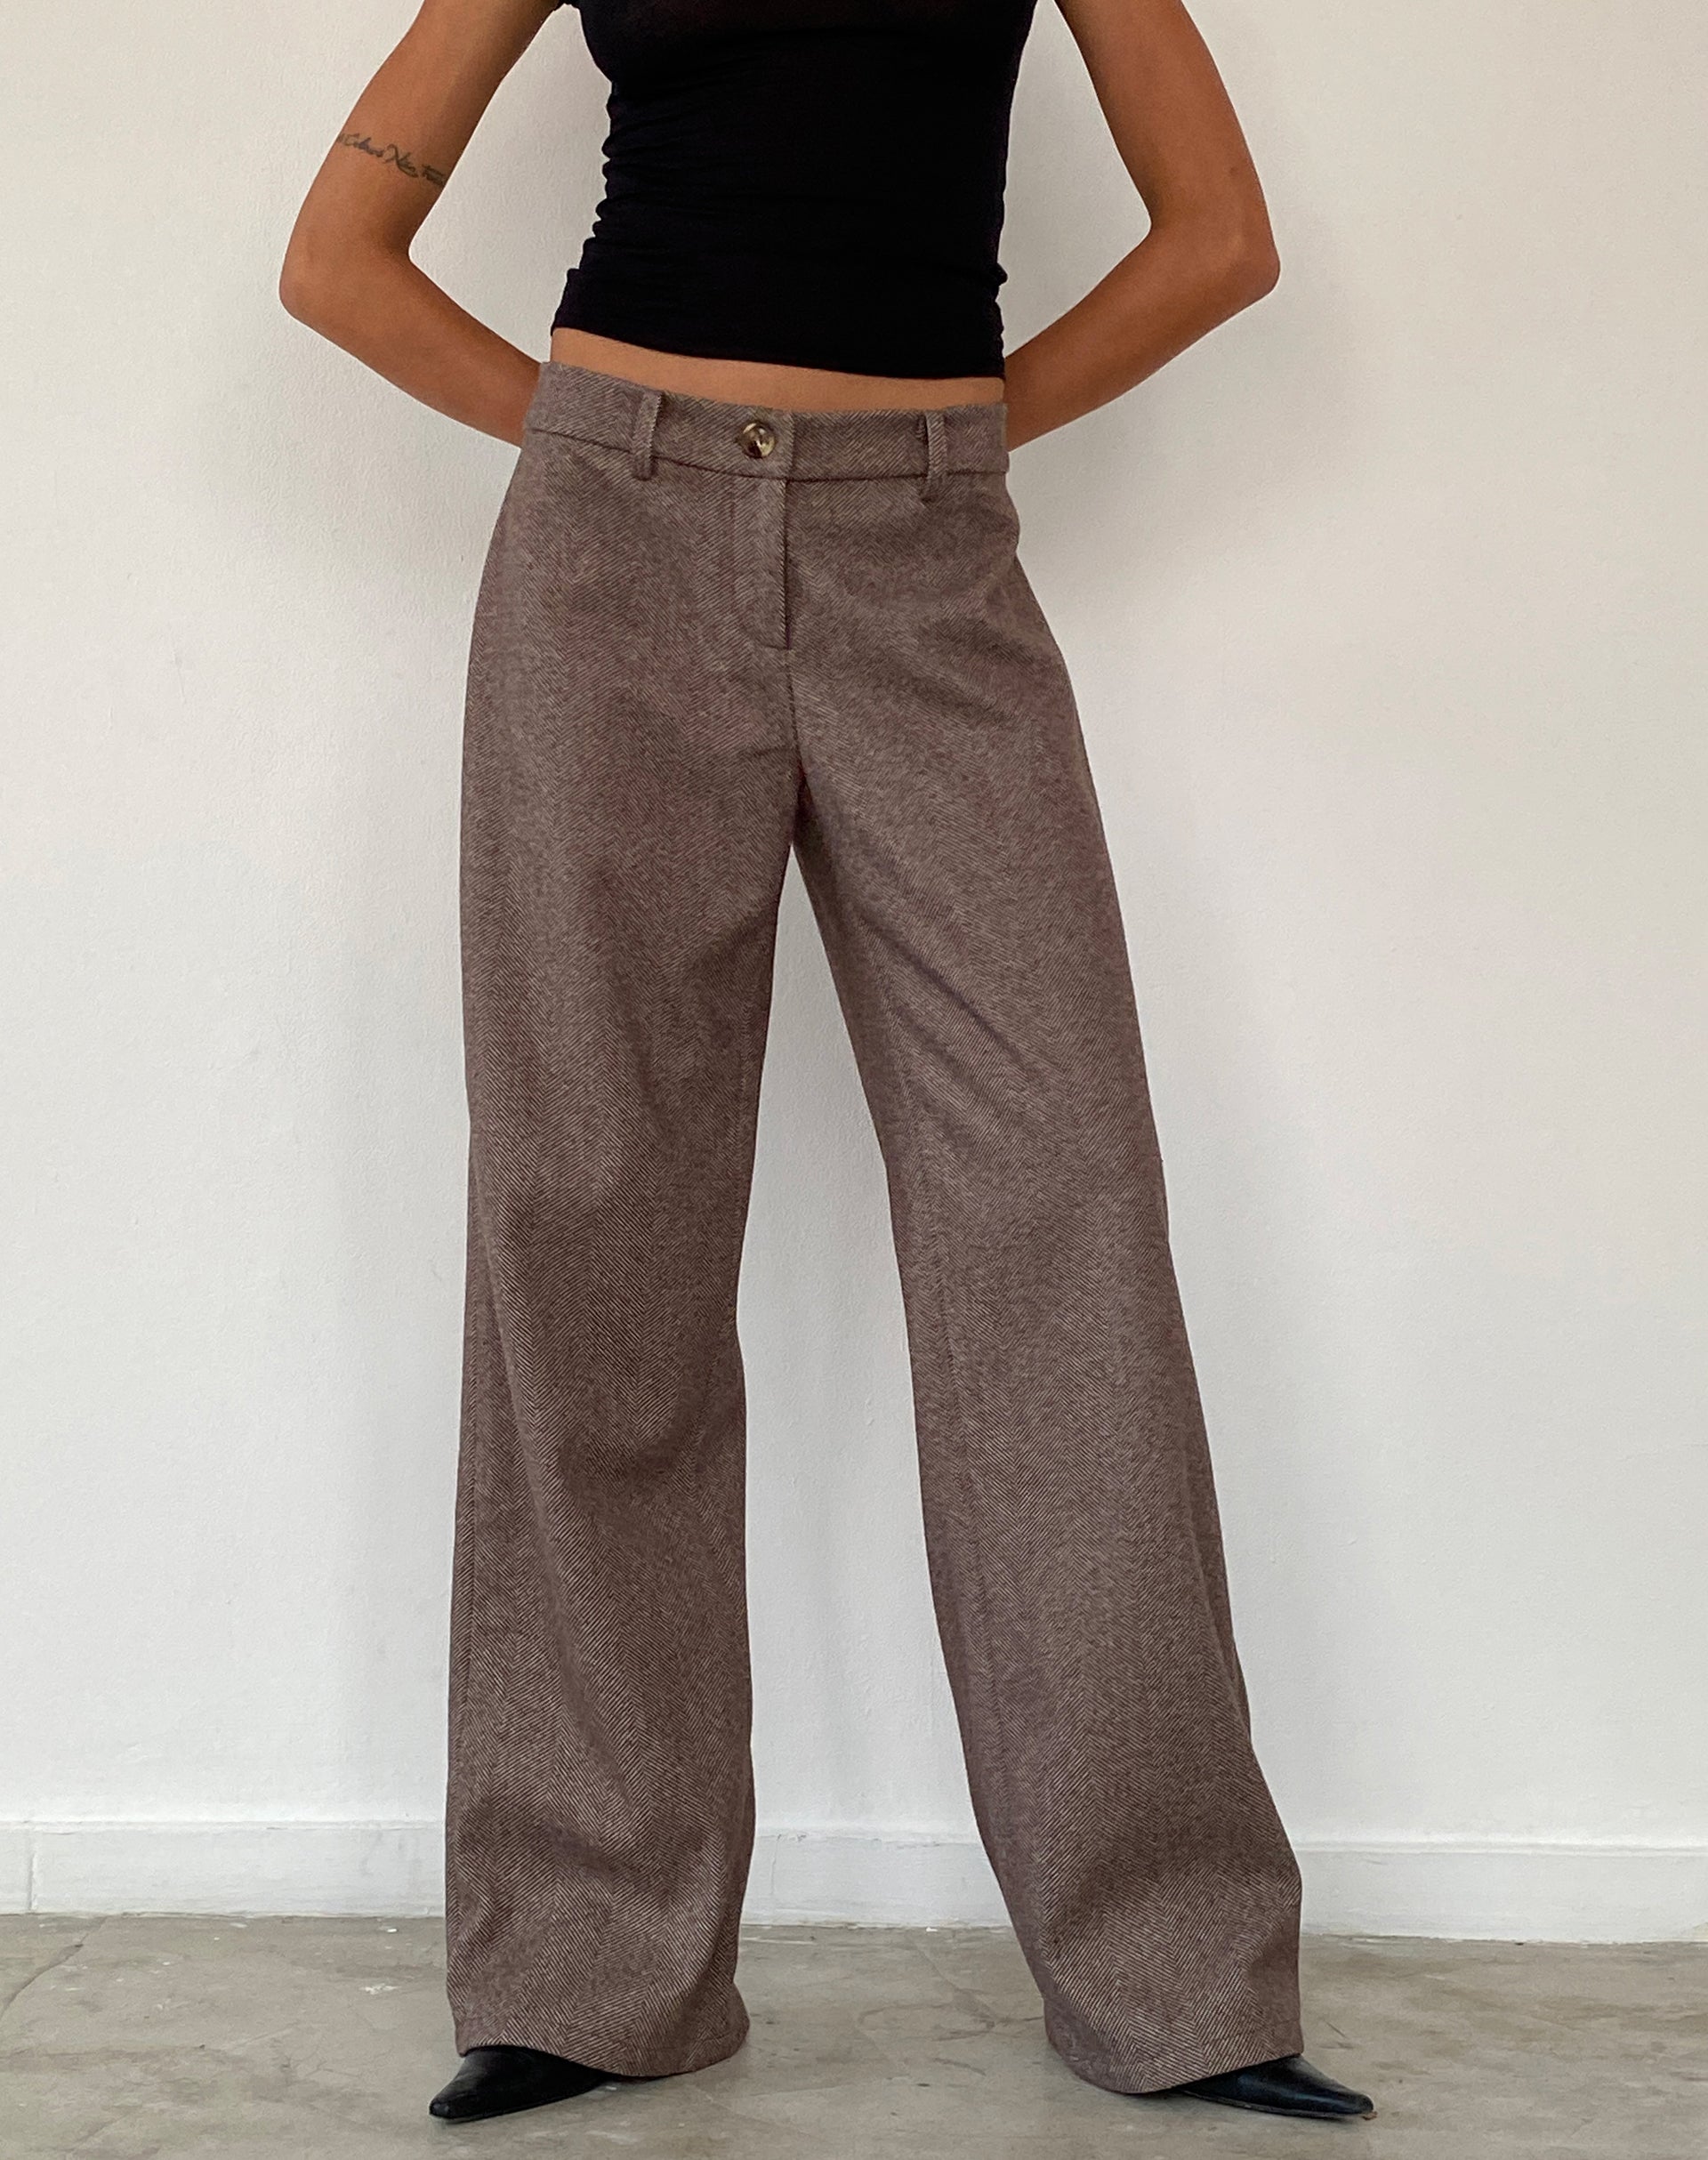 Image of Helsa Low Rise Trouser in Dark Brown Tailoring